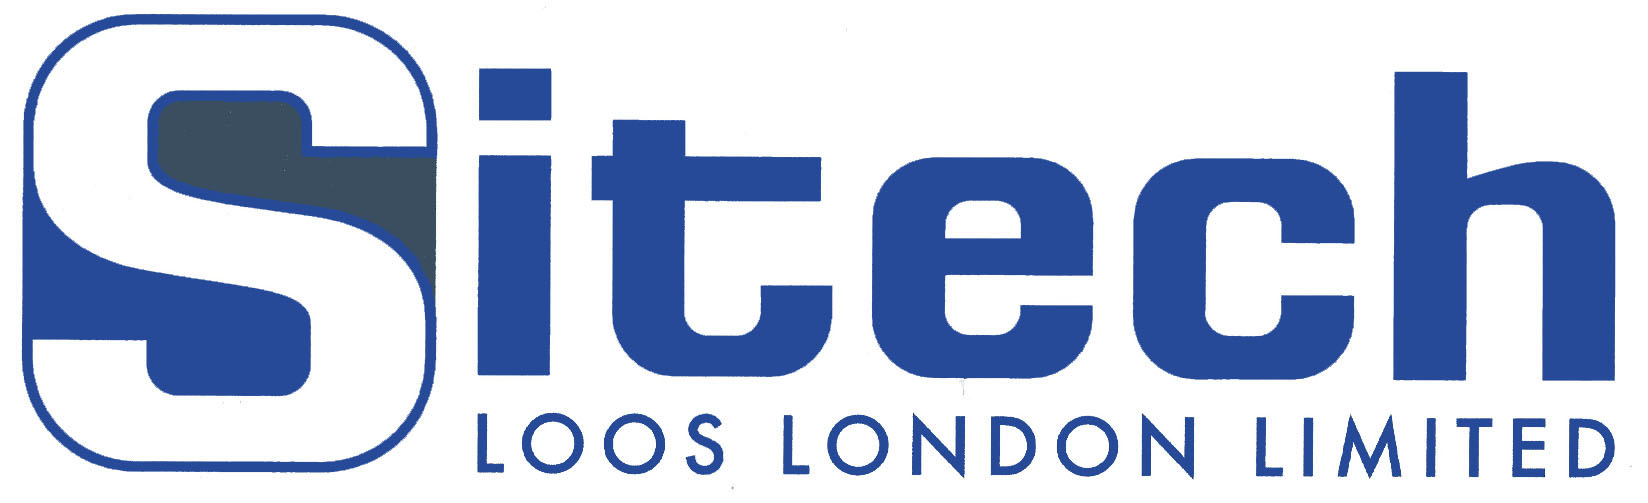 Toilet Hire | Sitetech Loos London